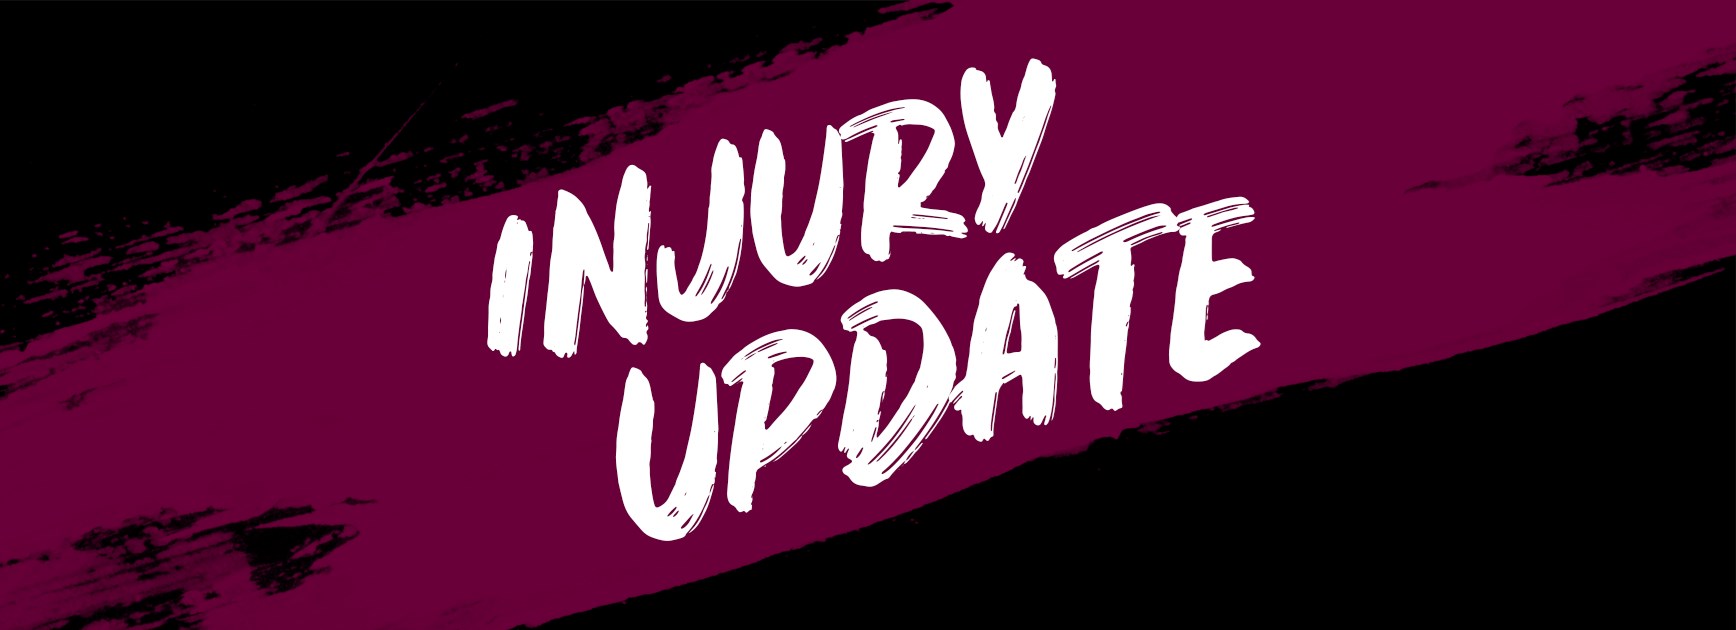 Injury Update - Round 4